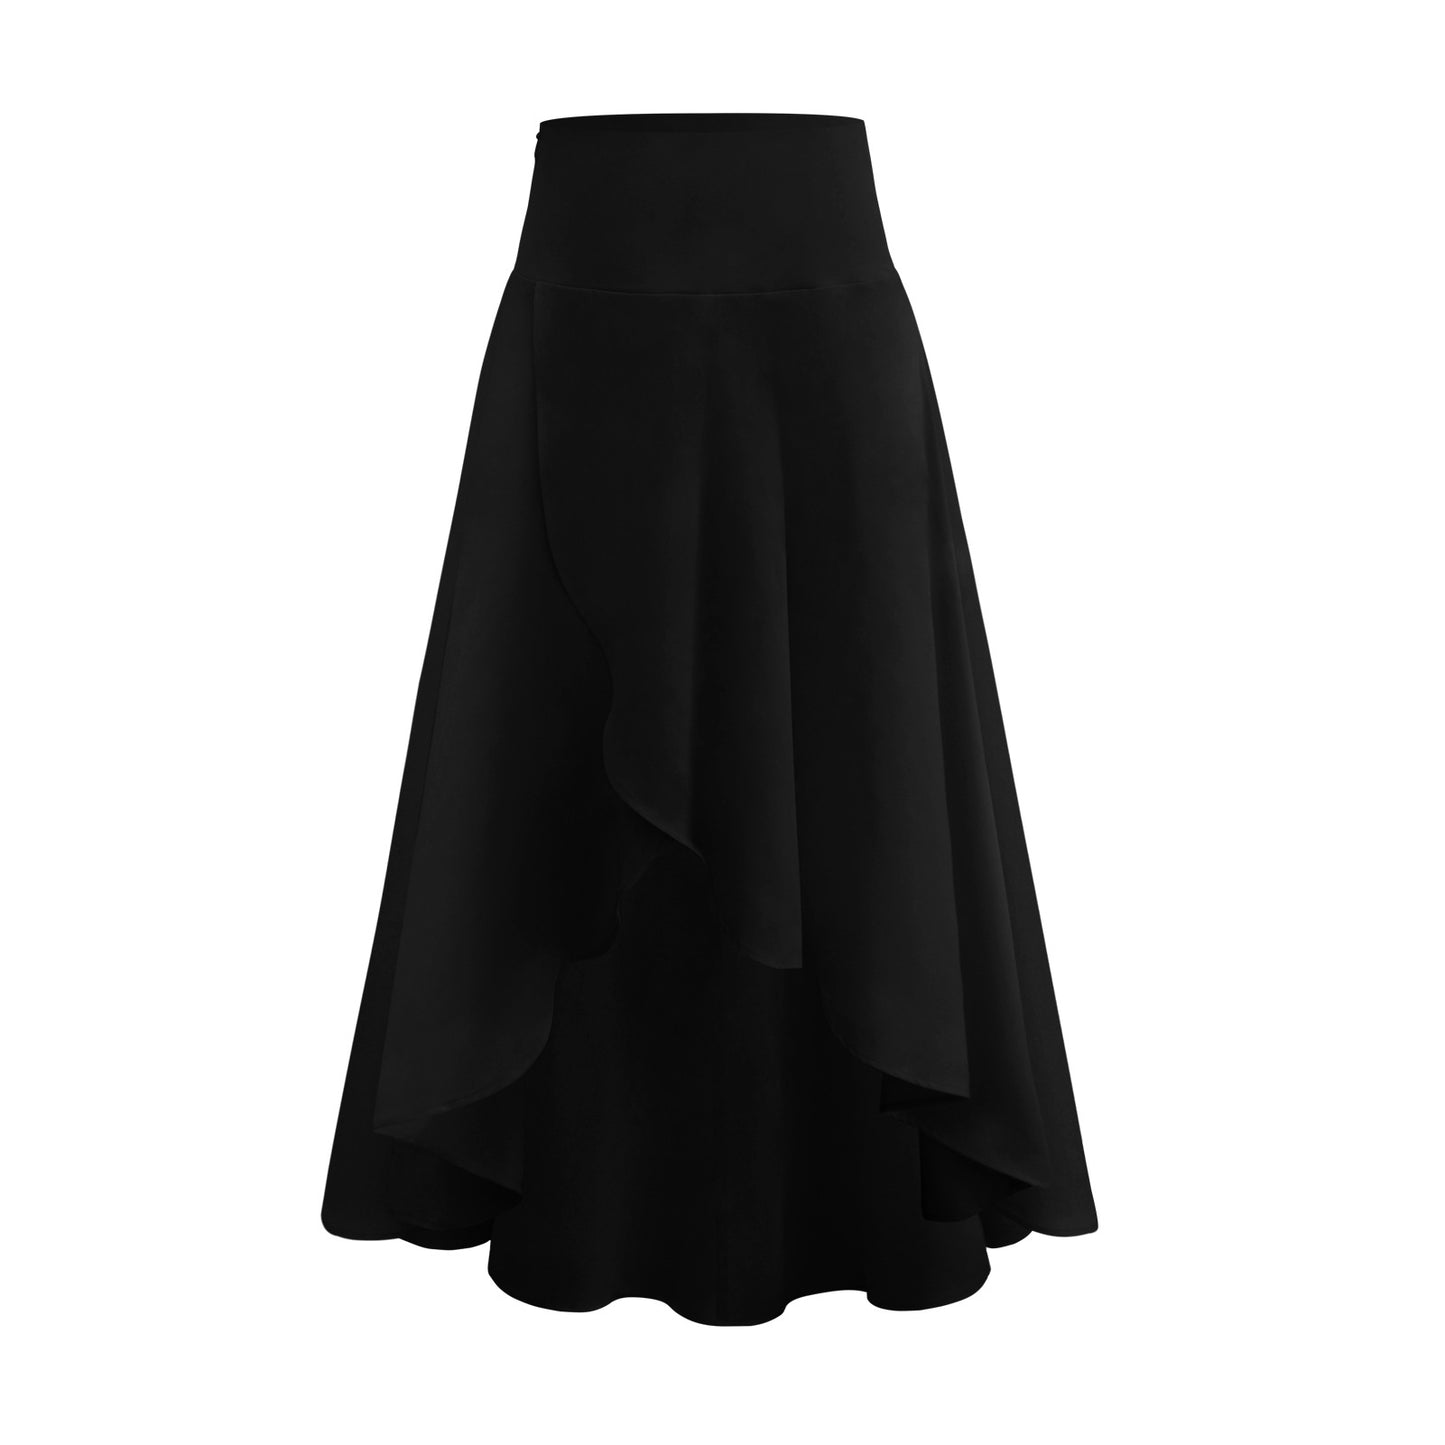 Cute Spring Outfits | High Waist Ruffle Skirt